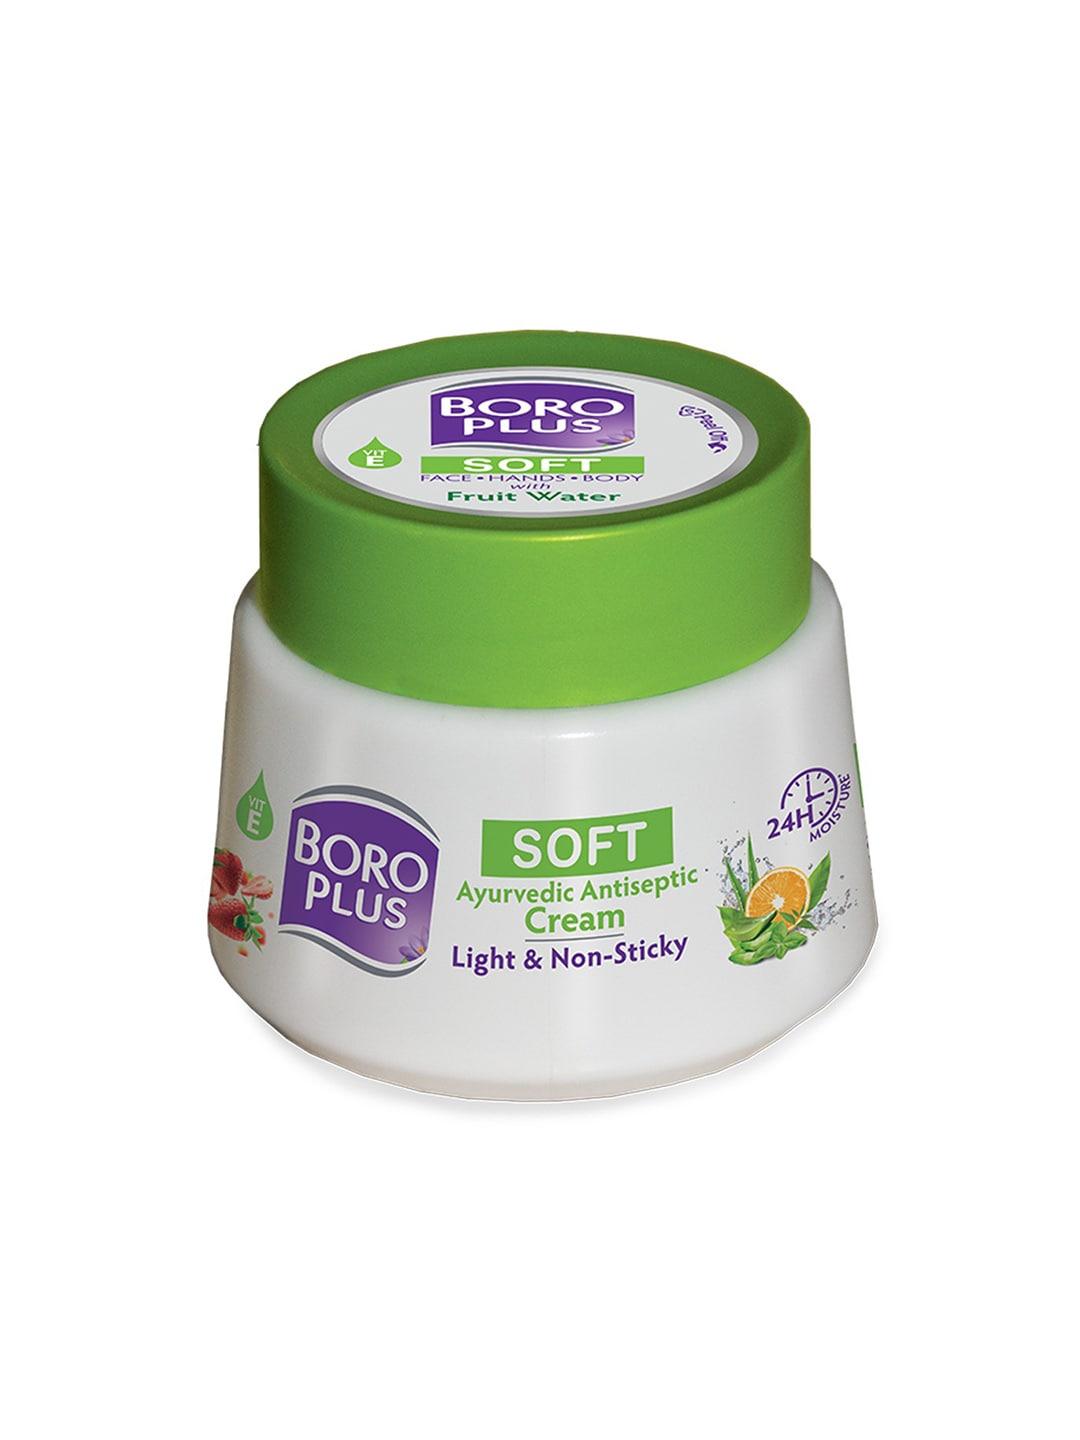 BOROPLUS Soft Ayurvedic Light & Non-Sticky Antiseptic Cream for 24 Hrs Moisture - 100 ml